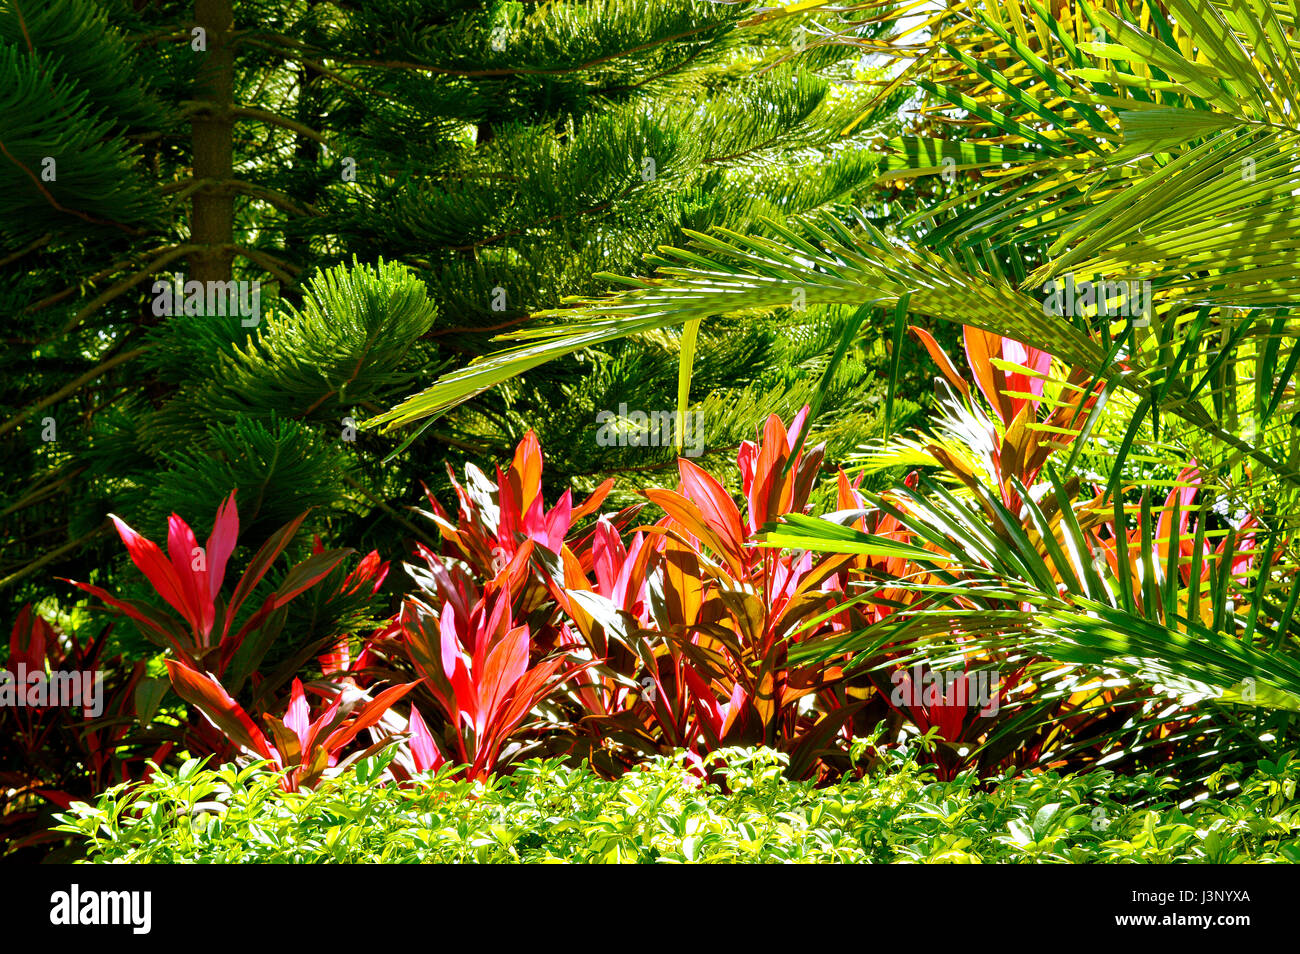 Hawaiian Ti Plant Latin name Cordyline terminalis surrounded by other green plants Stock Photo